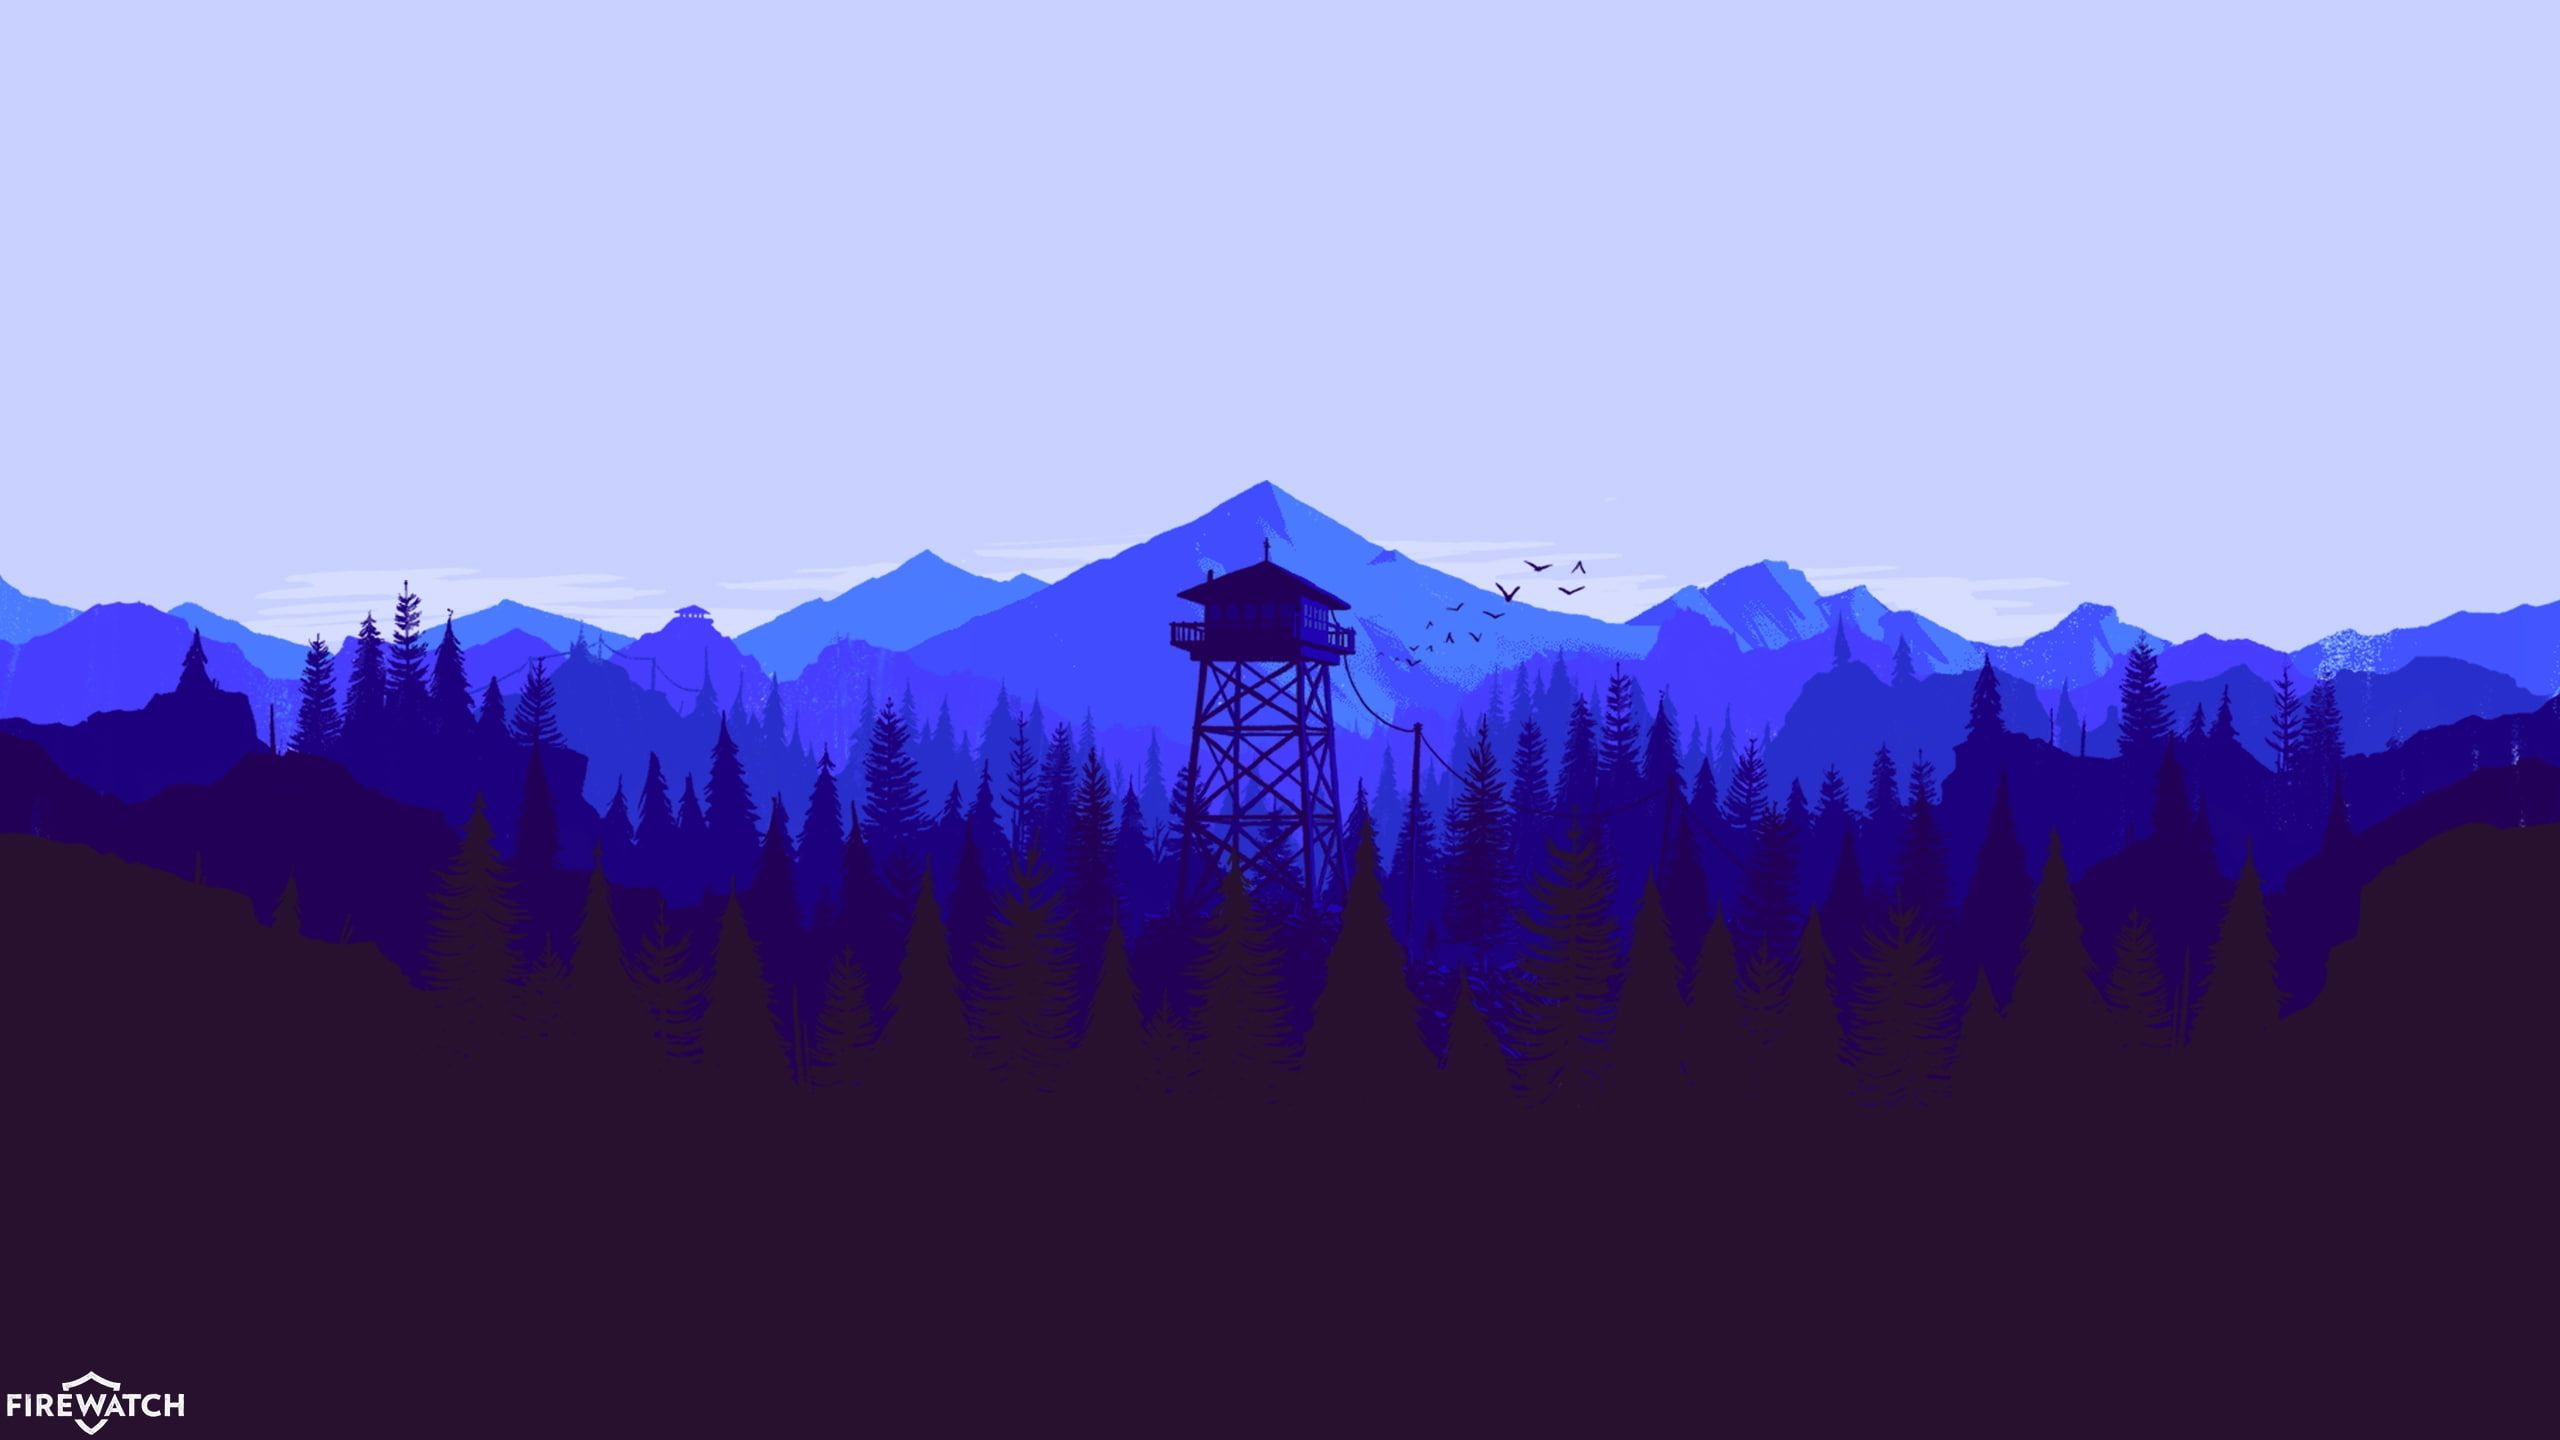 firewatch #minimalistic #artwork #Games K #wallpaper #hdwallpaper #desktop. Computer wallpaper desktop wallpaper, Landscape wallpaper, Blue background image